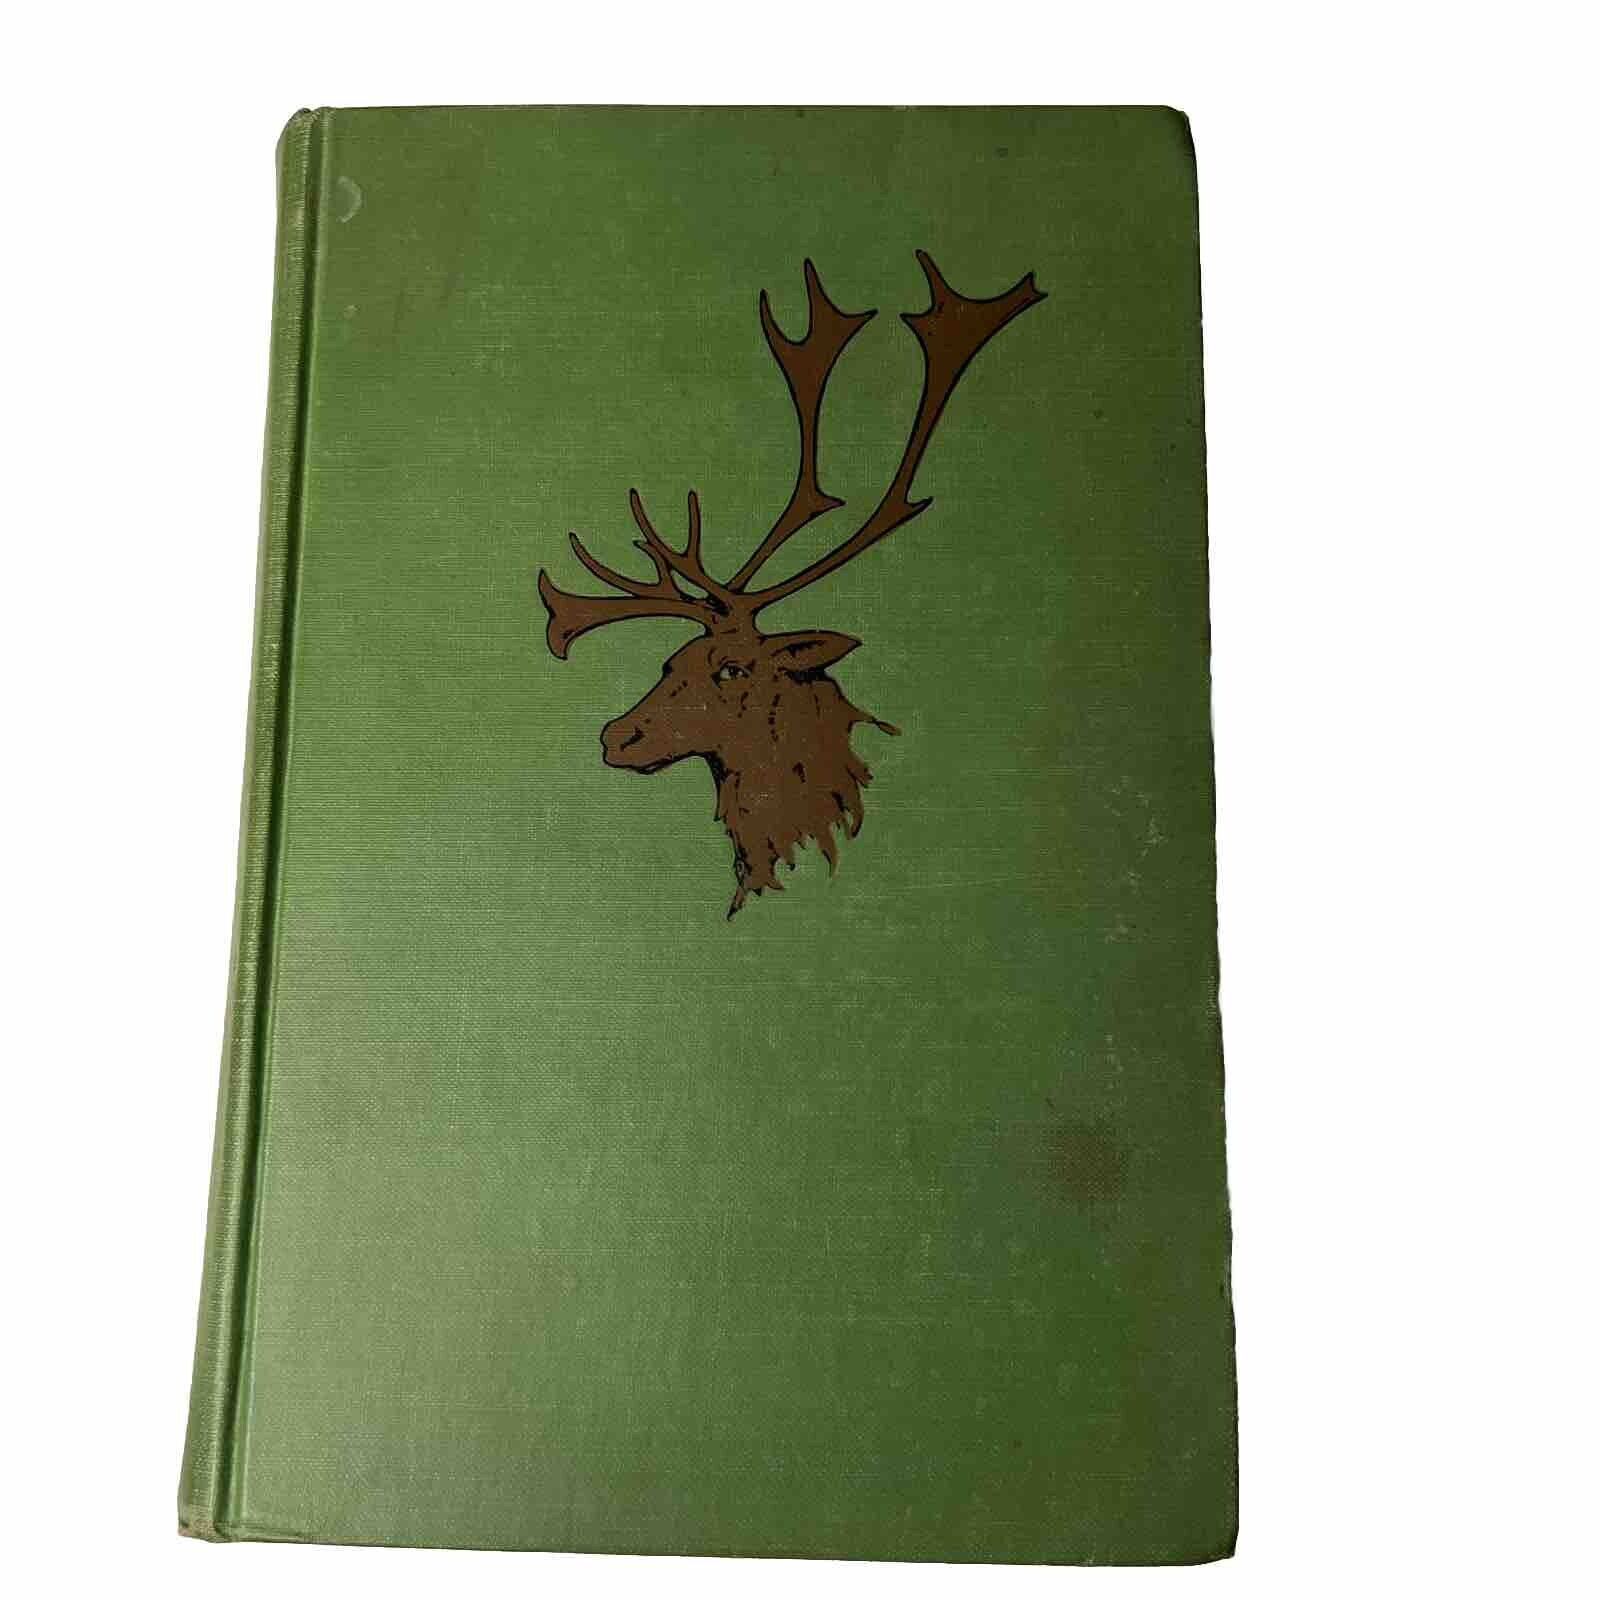 BSA The Book of Woodcraft by Ernest Seton-Thompson Hardback 1921 BS-832